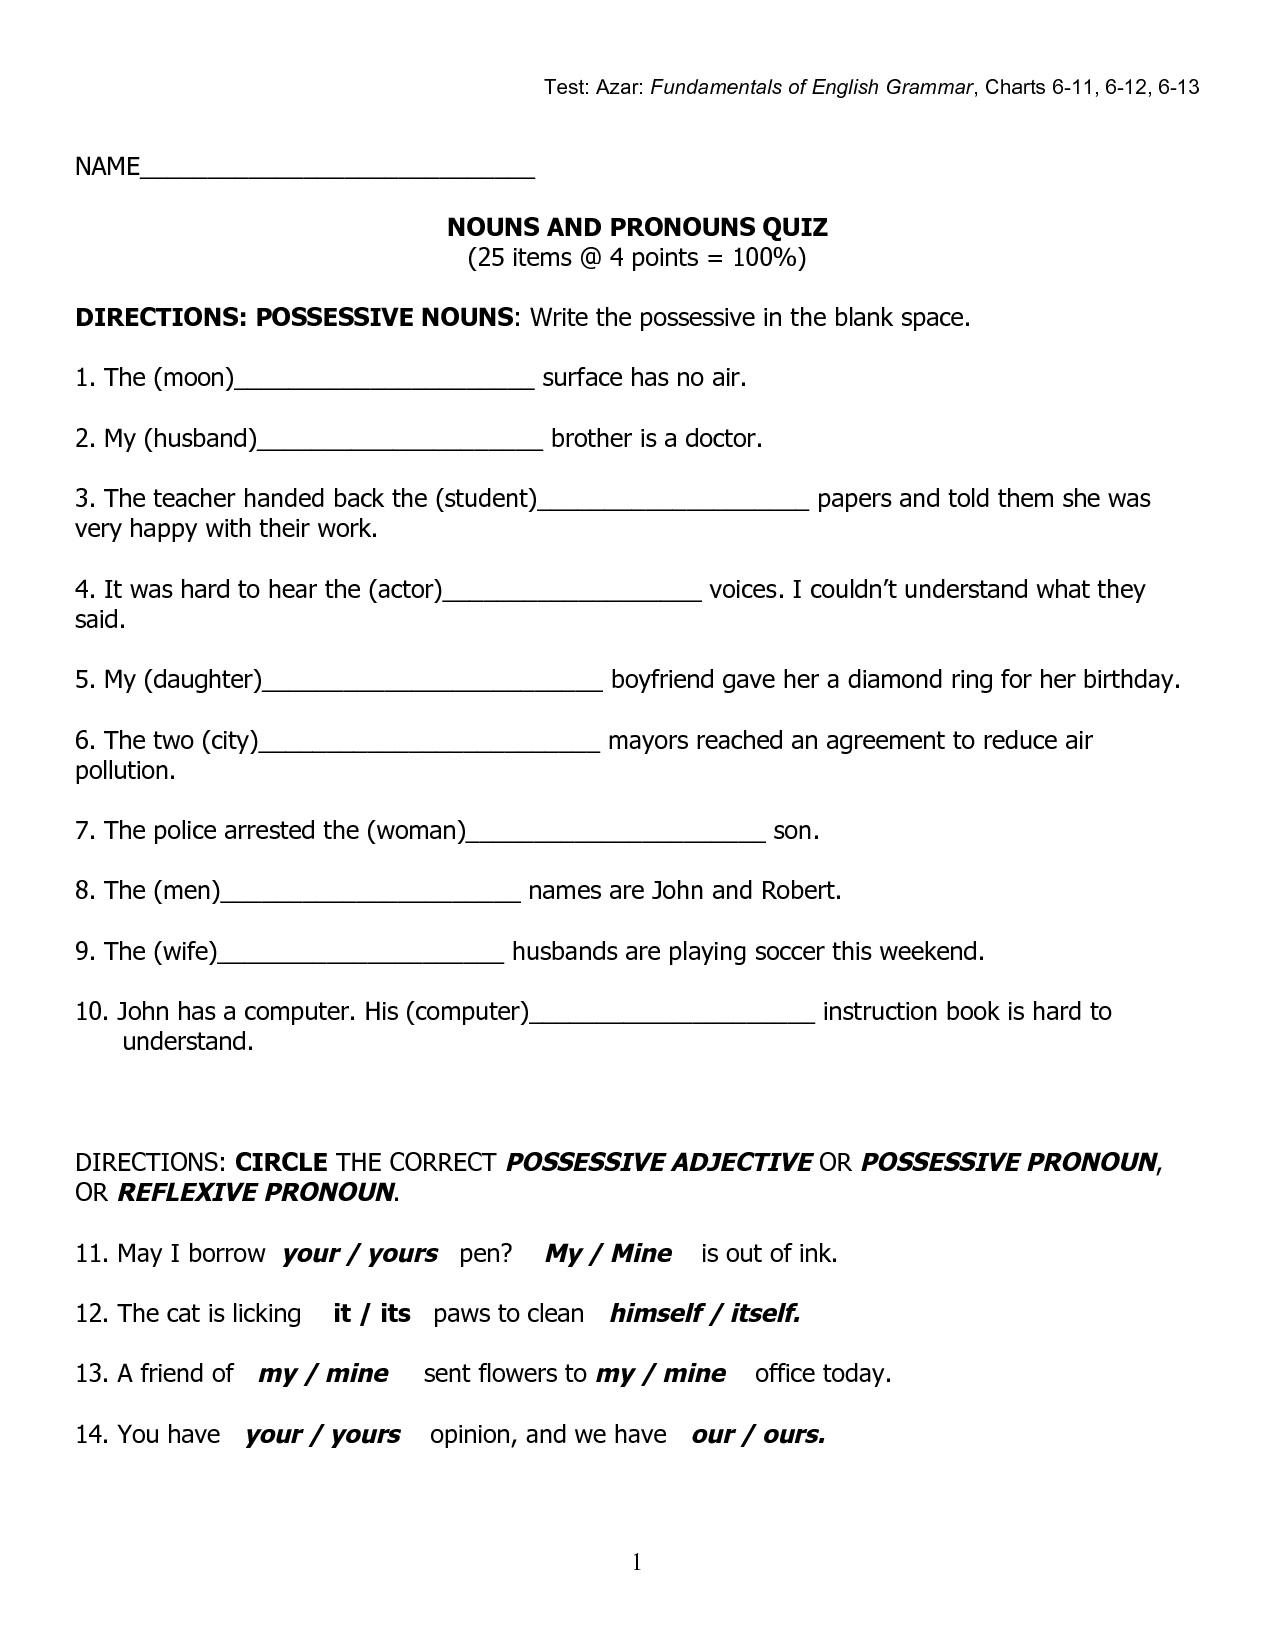 17-free-possessive-nouns-printable-worksheets-worksheeto